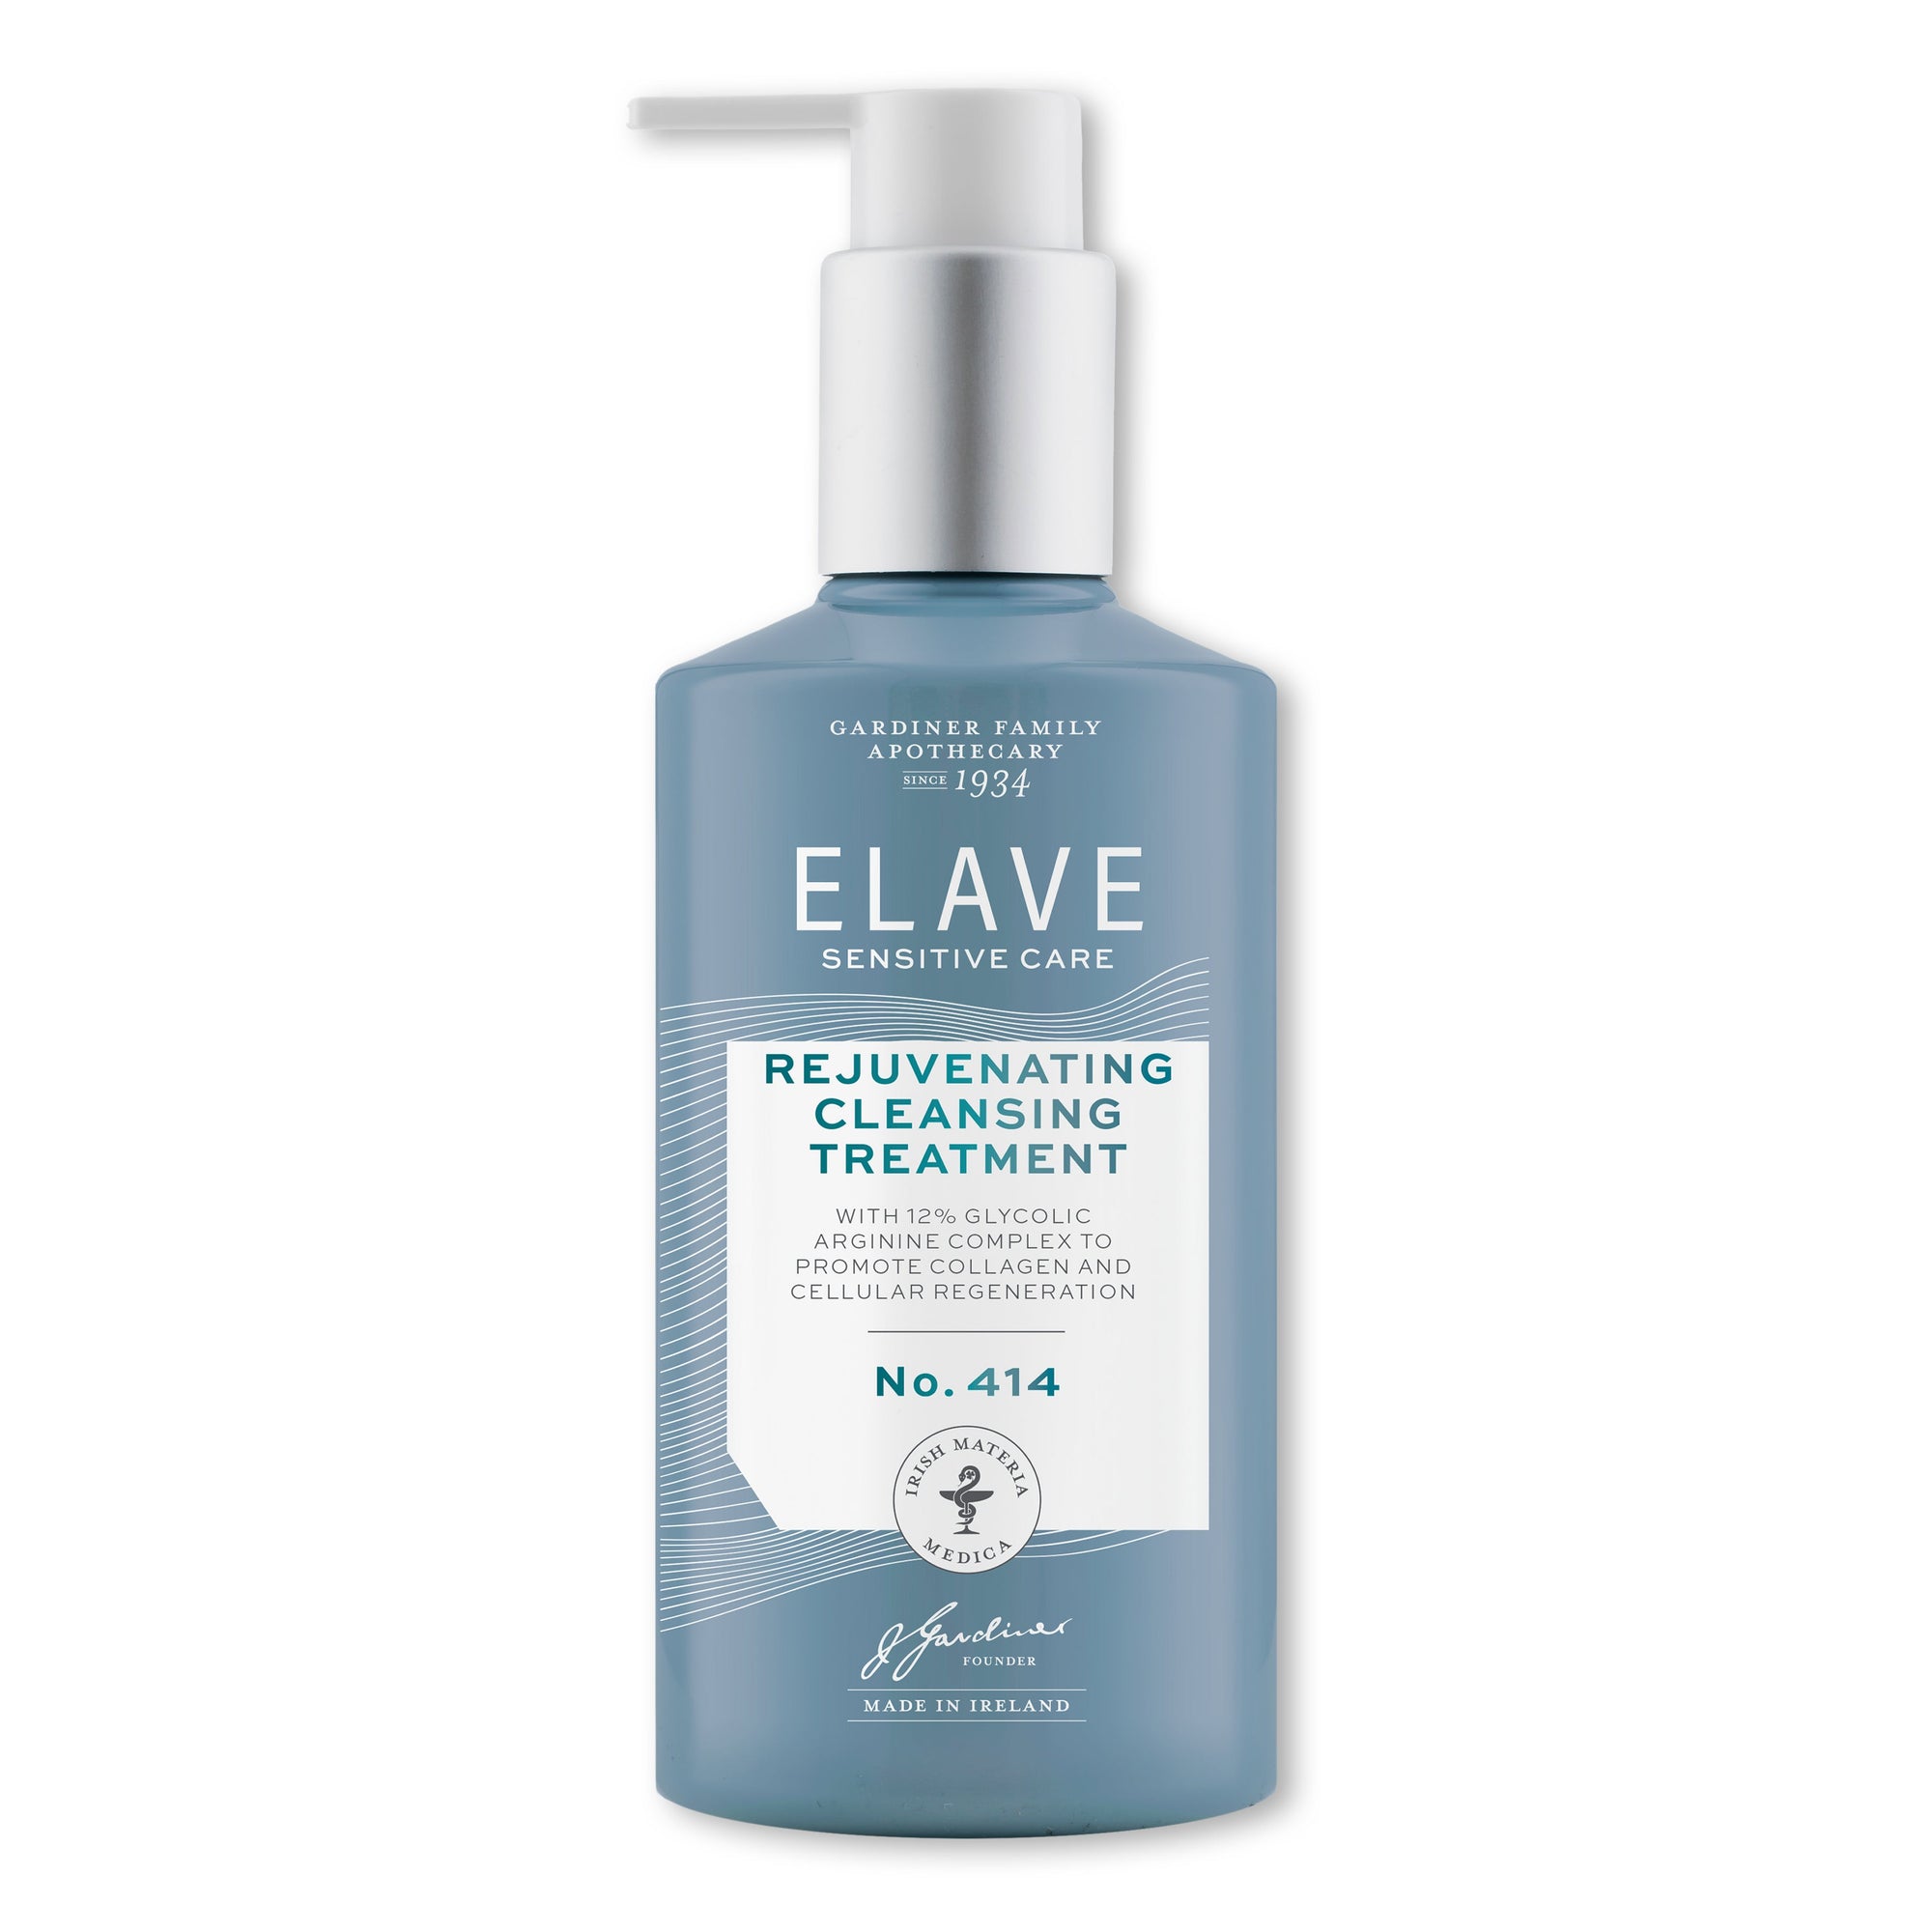 Elave 活膚潔顏護理200毫升 (No.414) / Elave Rejuvenating Cleansing Treatment No.414 200ml